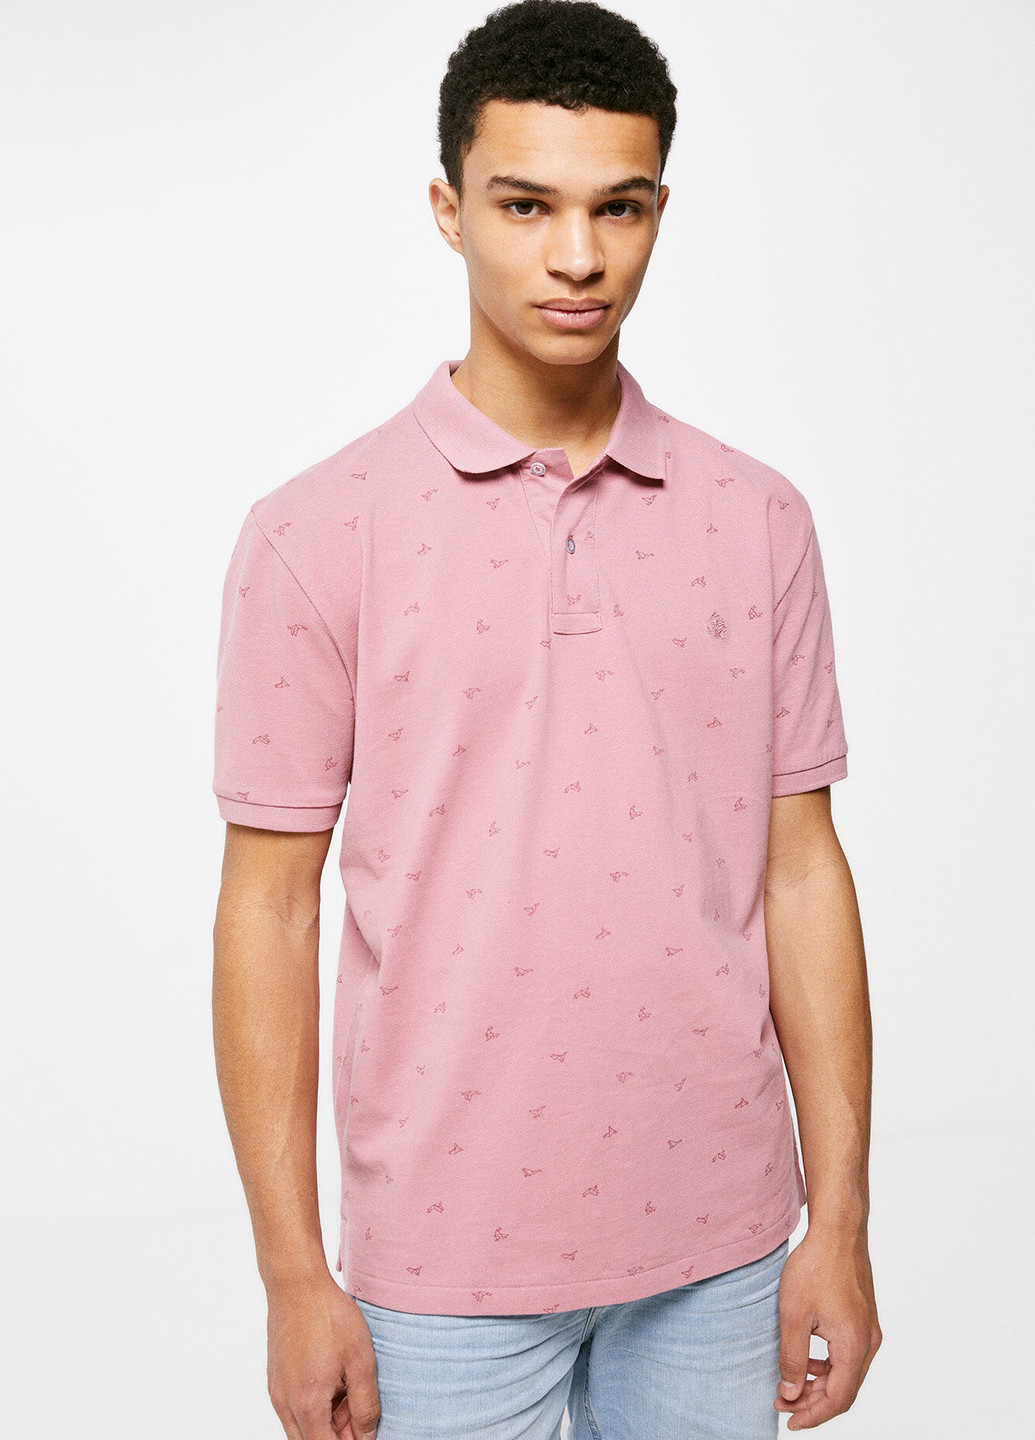 Розовая футболка-поло для мужчин Springfield с рисунком